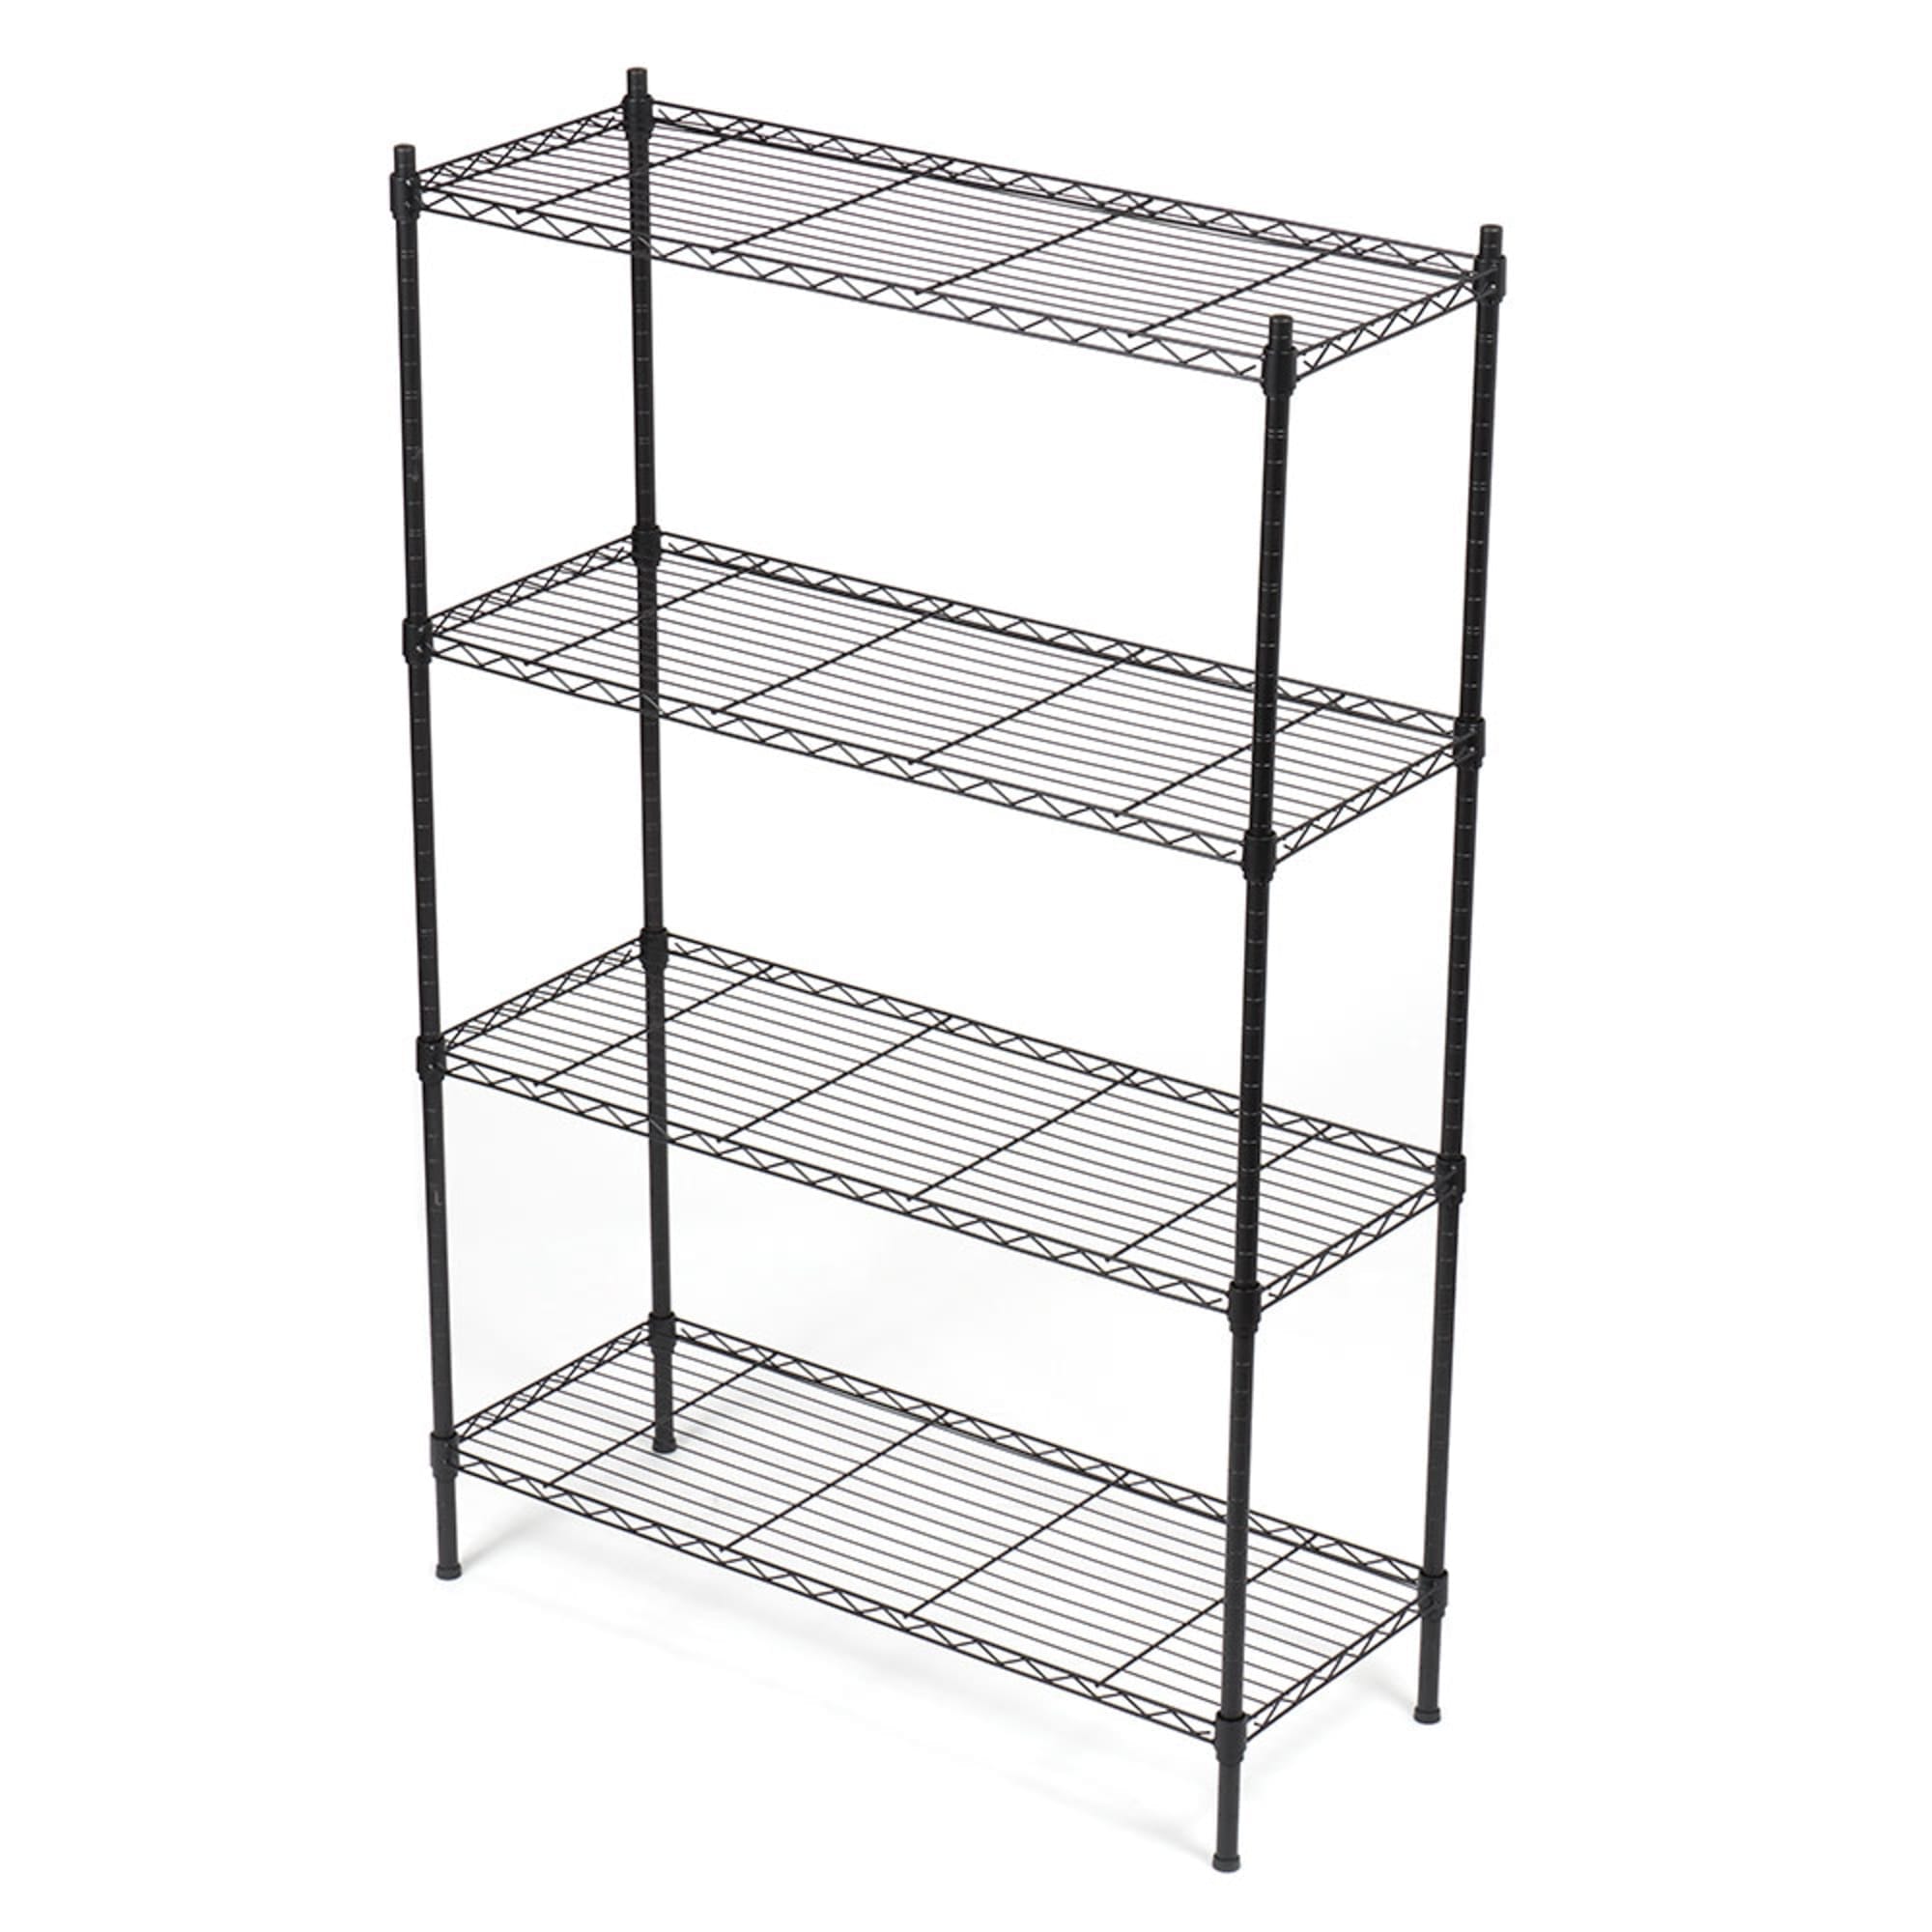 Home Basics 4 Tier Steel Wire Shelf Rack, Black $50.00 EACH, CASE PACK OF 1